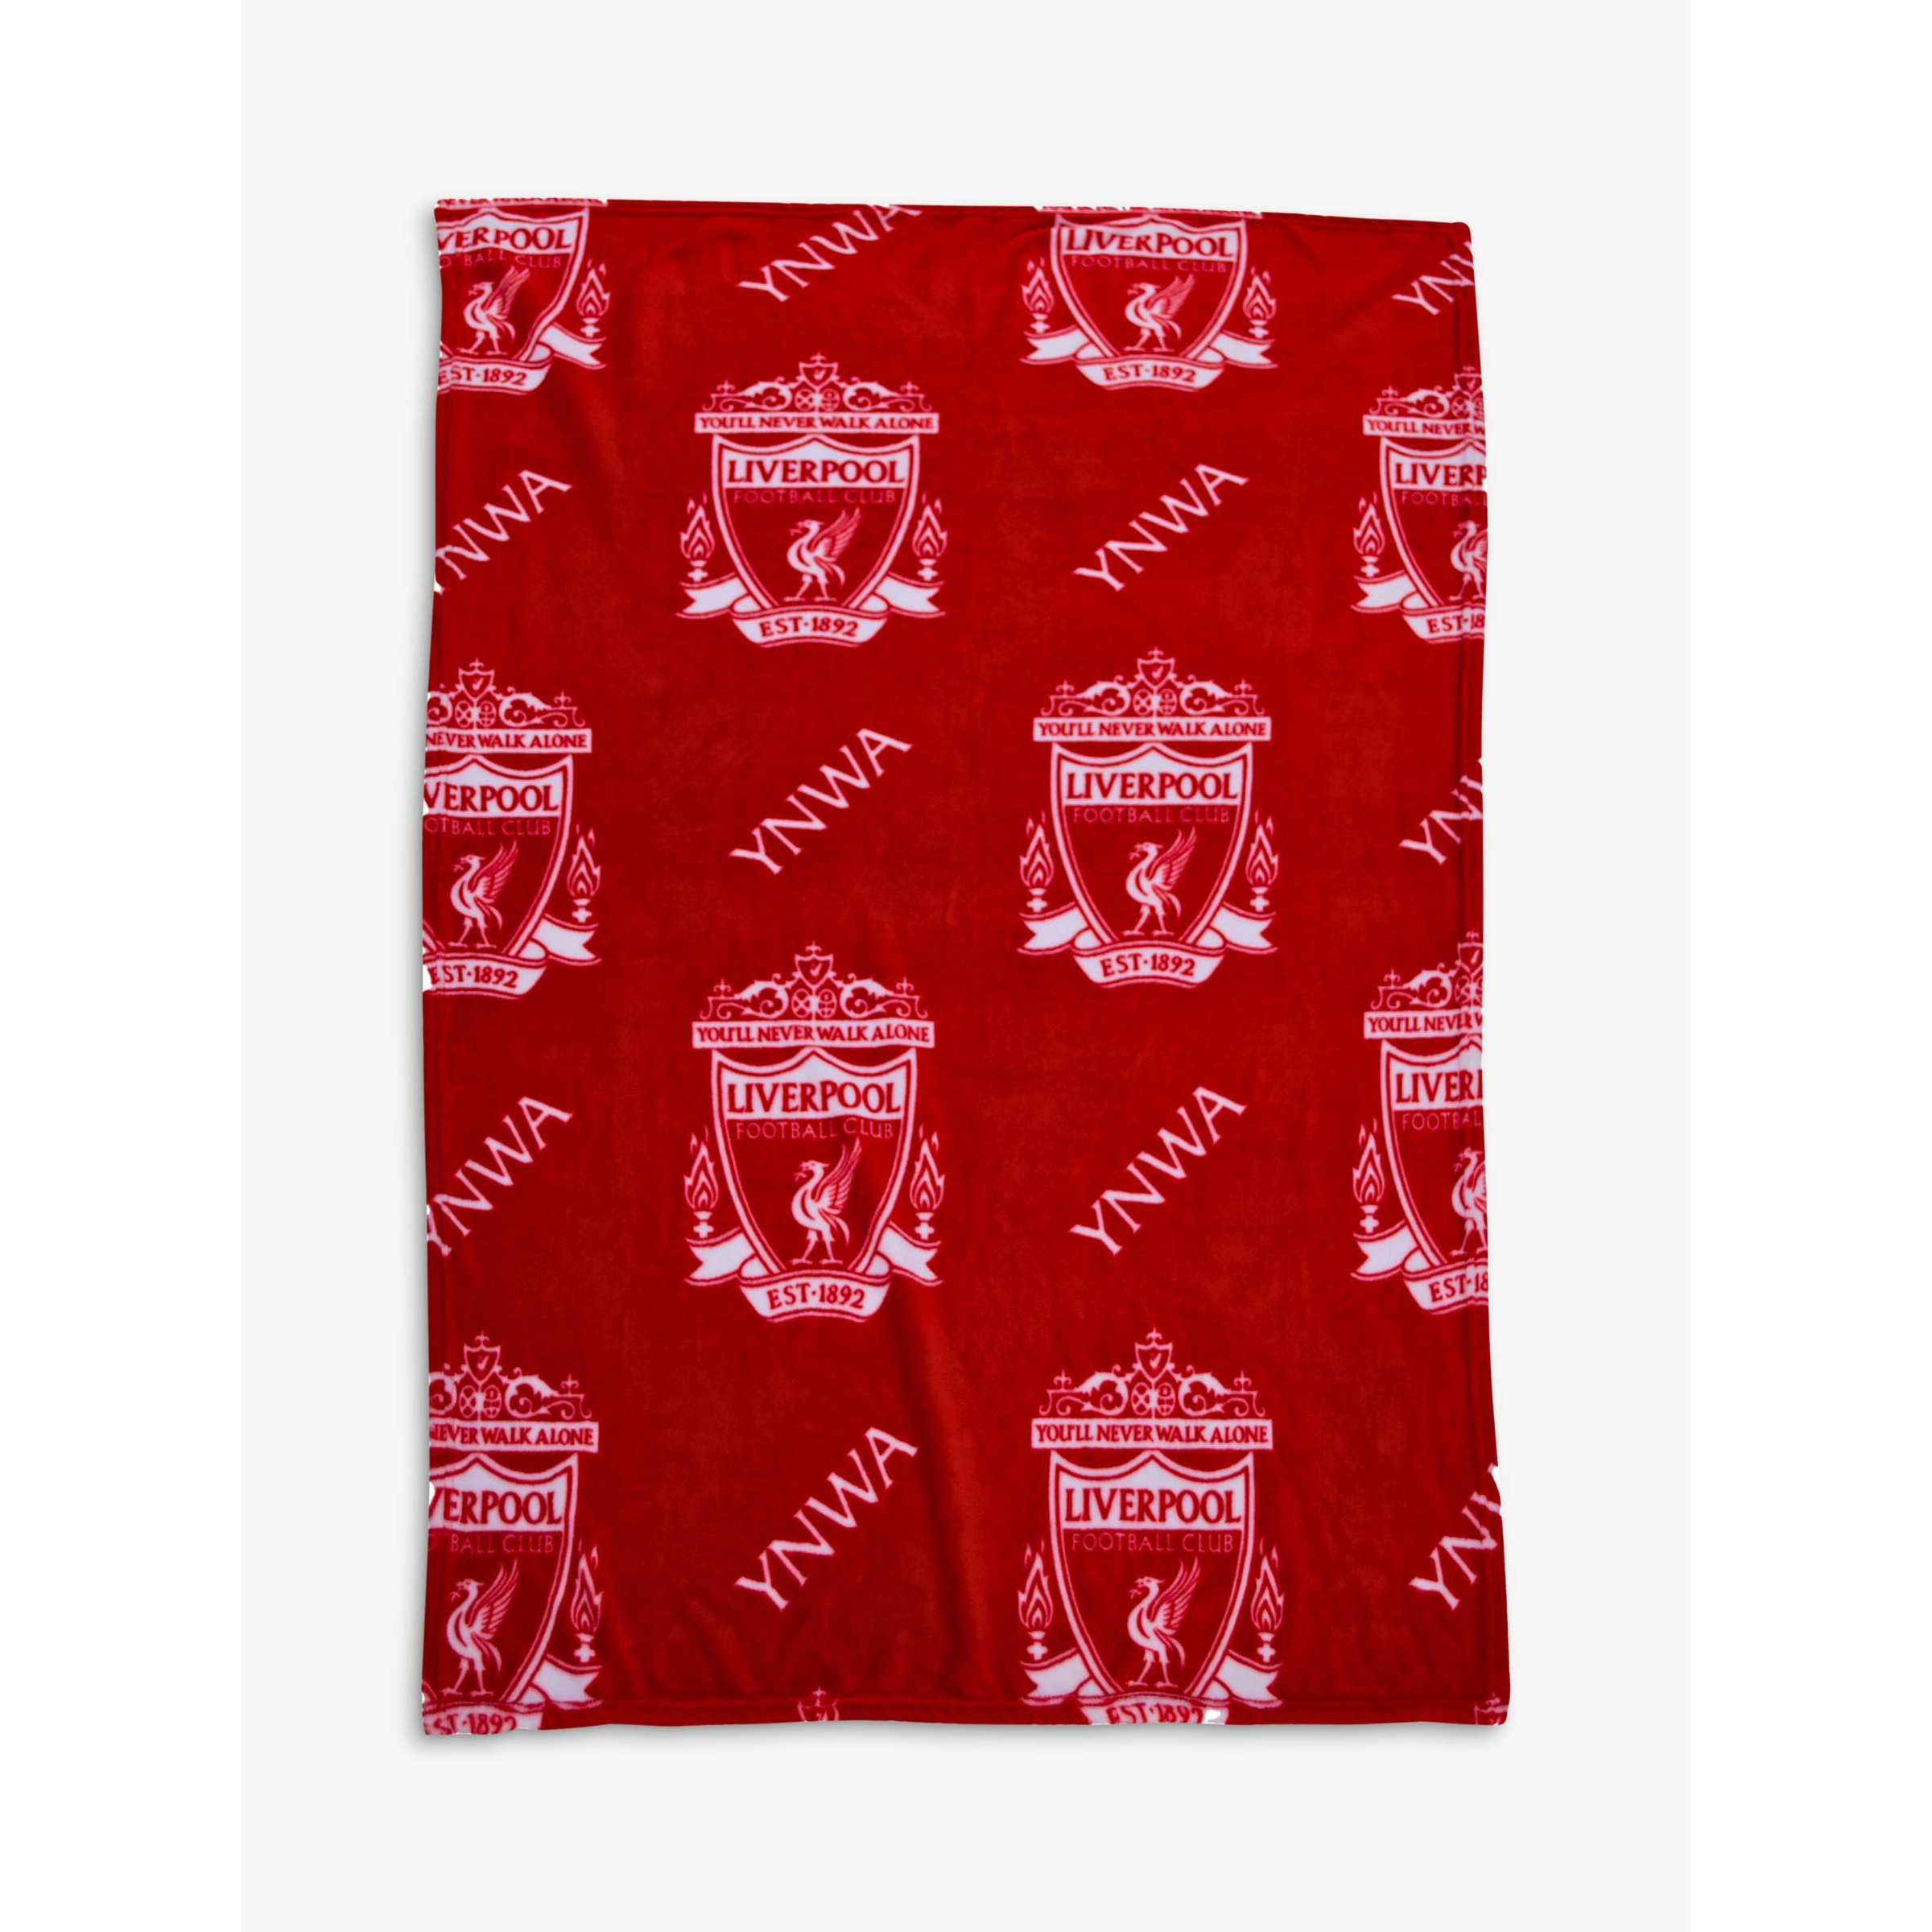 Rest Easy Sleep Better Liverpool FC Fleece Blanket - image 1